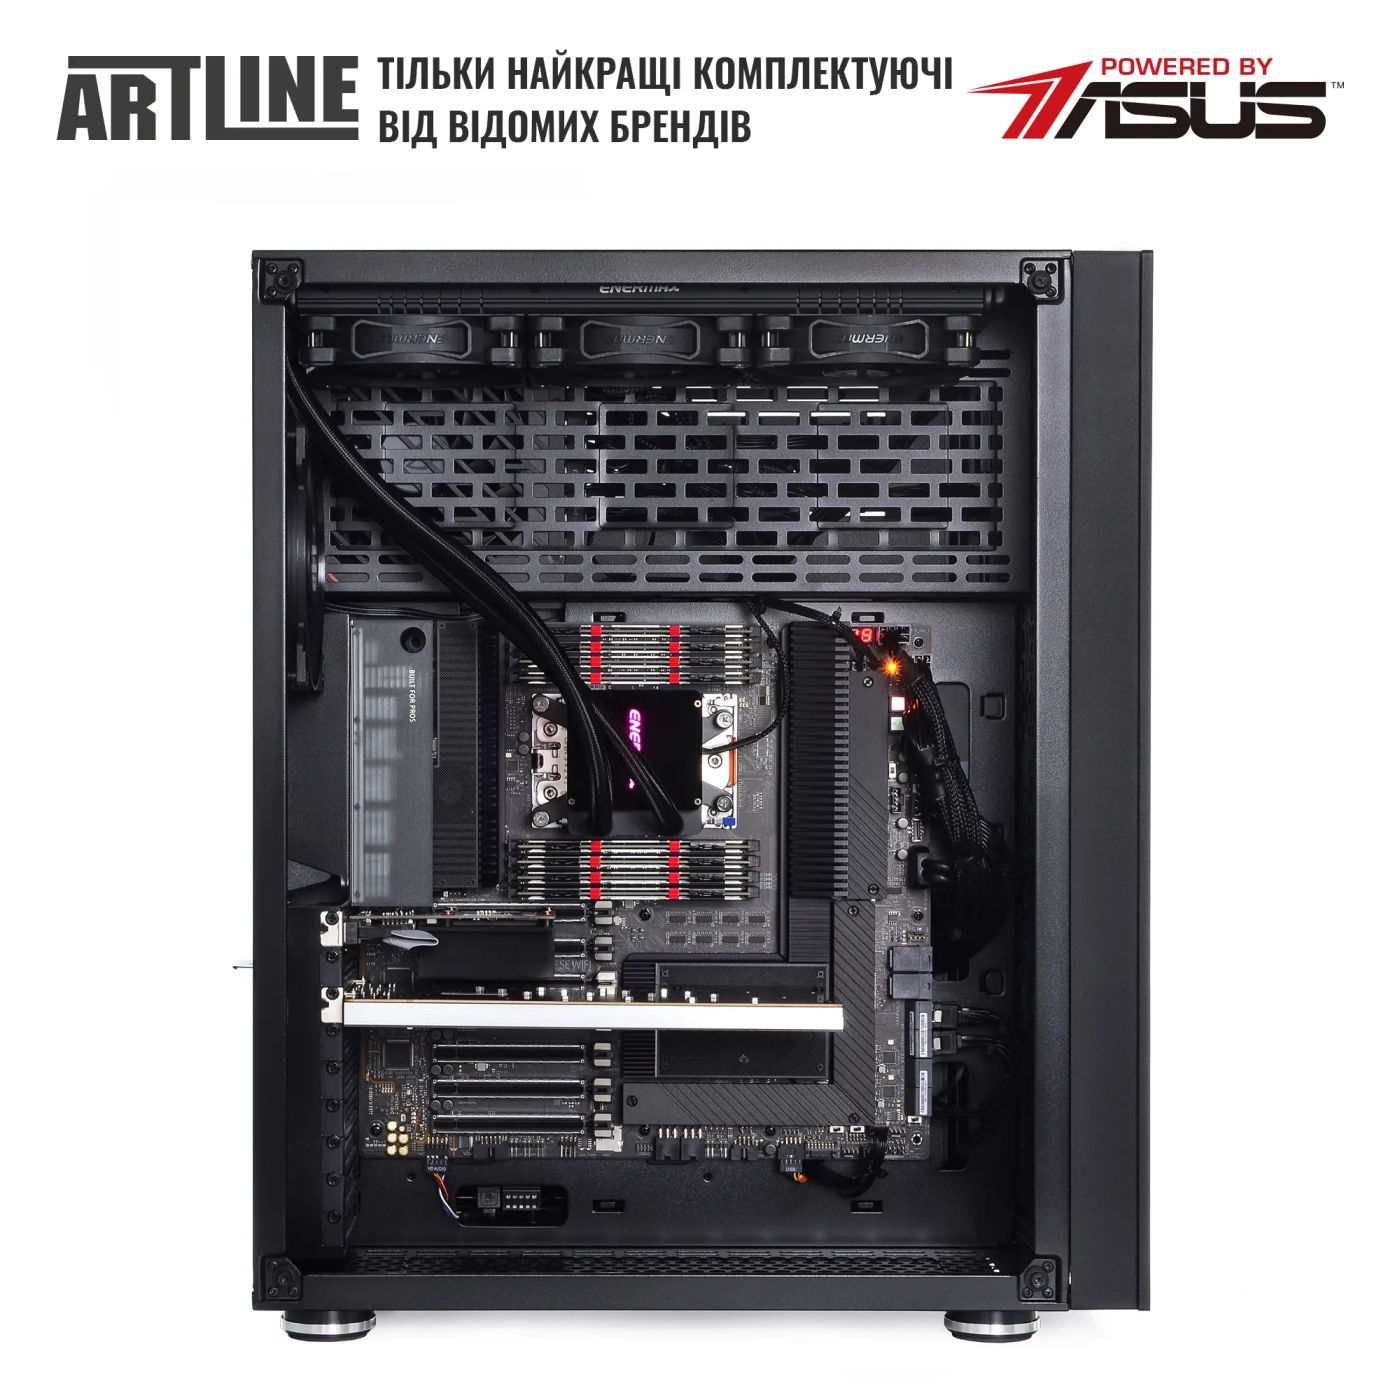 Купити Сервер ARTLINE Business T85v07 - фото 5